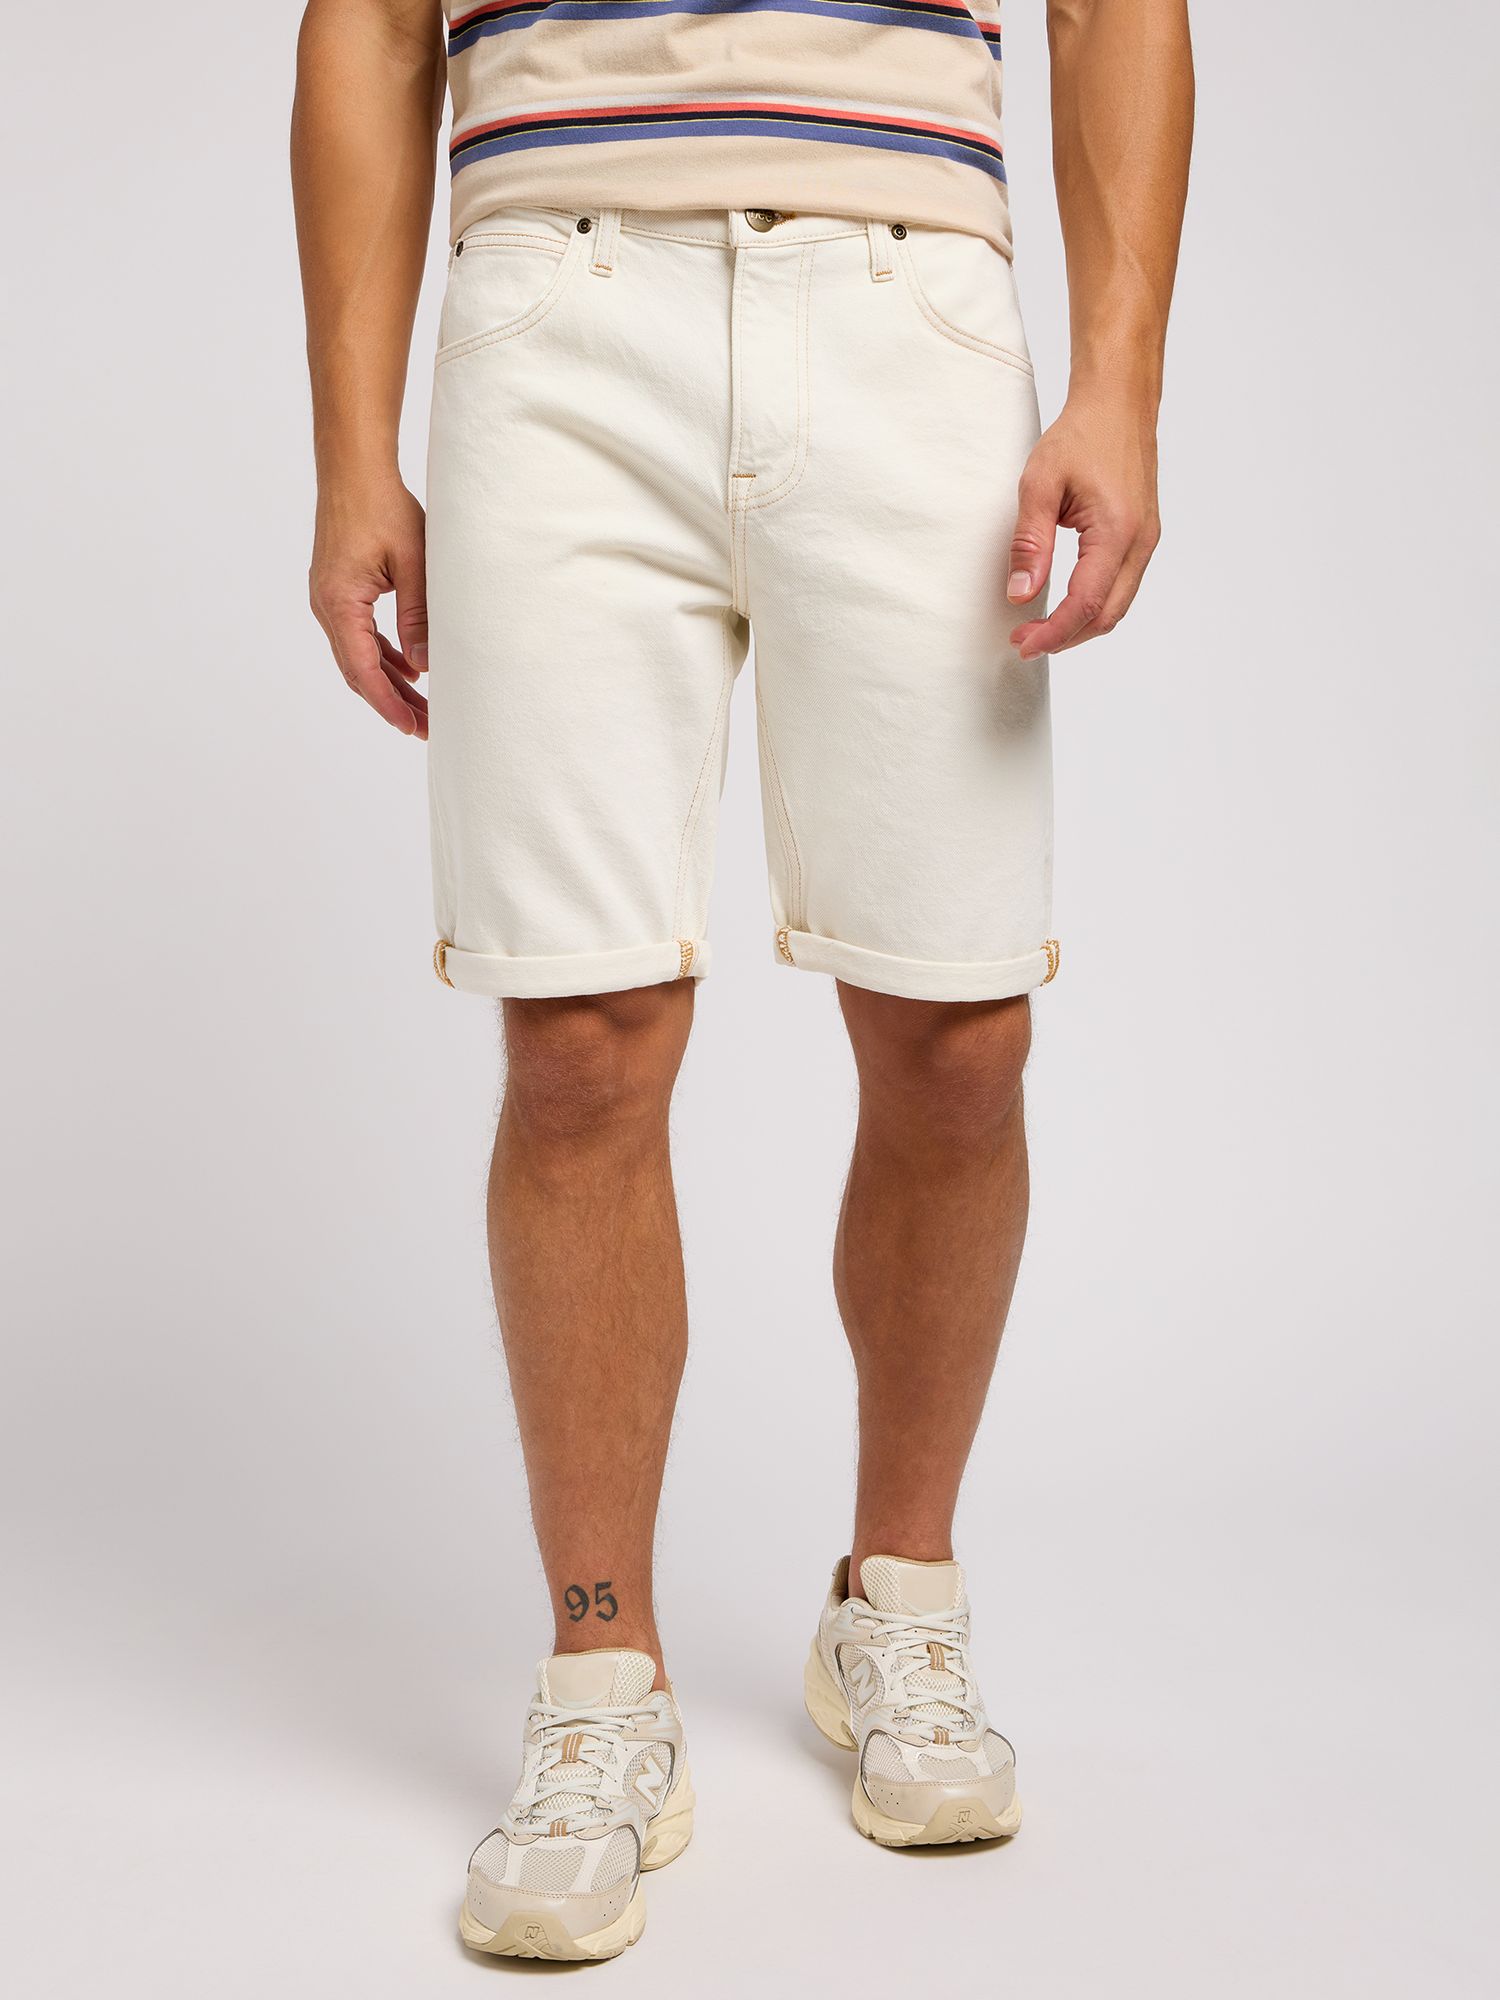 Lee 5 Pocket Contrast Stitch Denim Shorts, Clean White, 30R